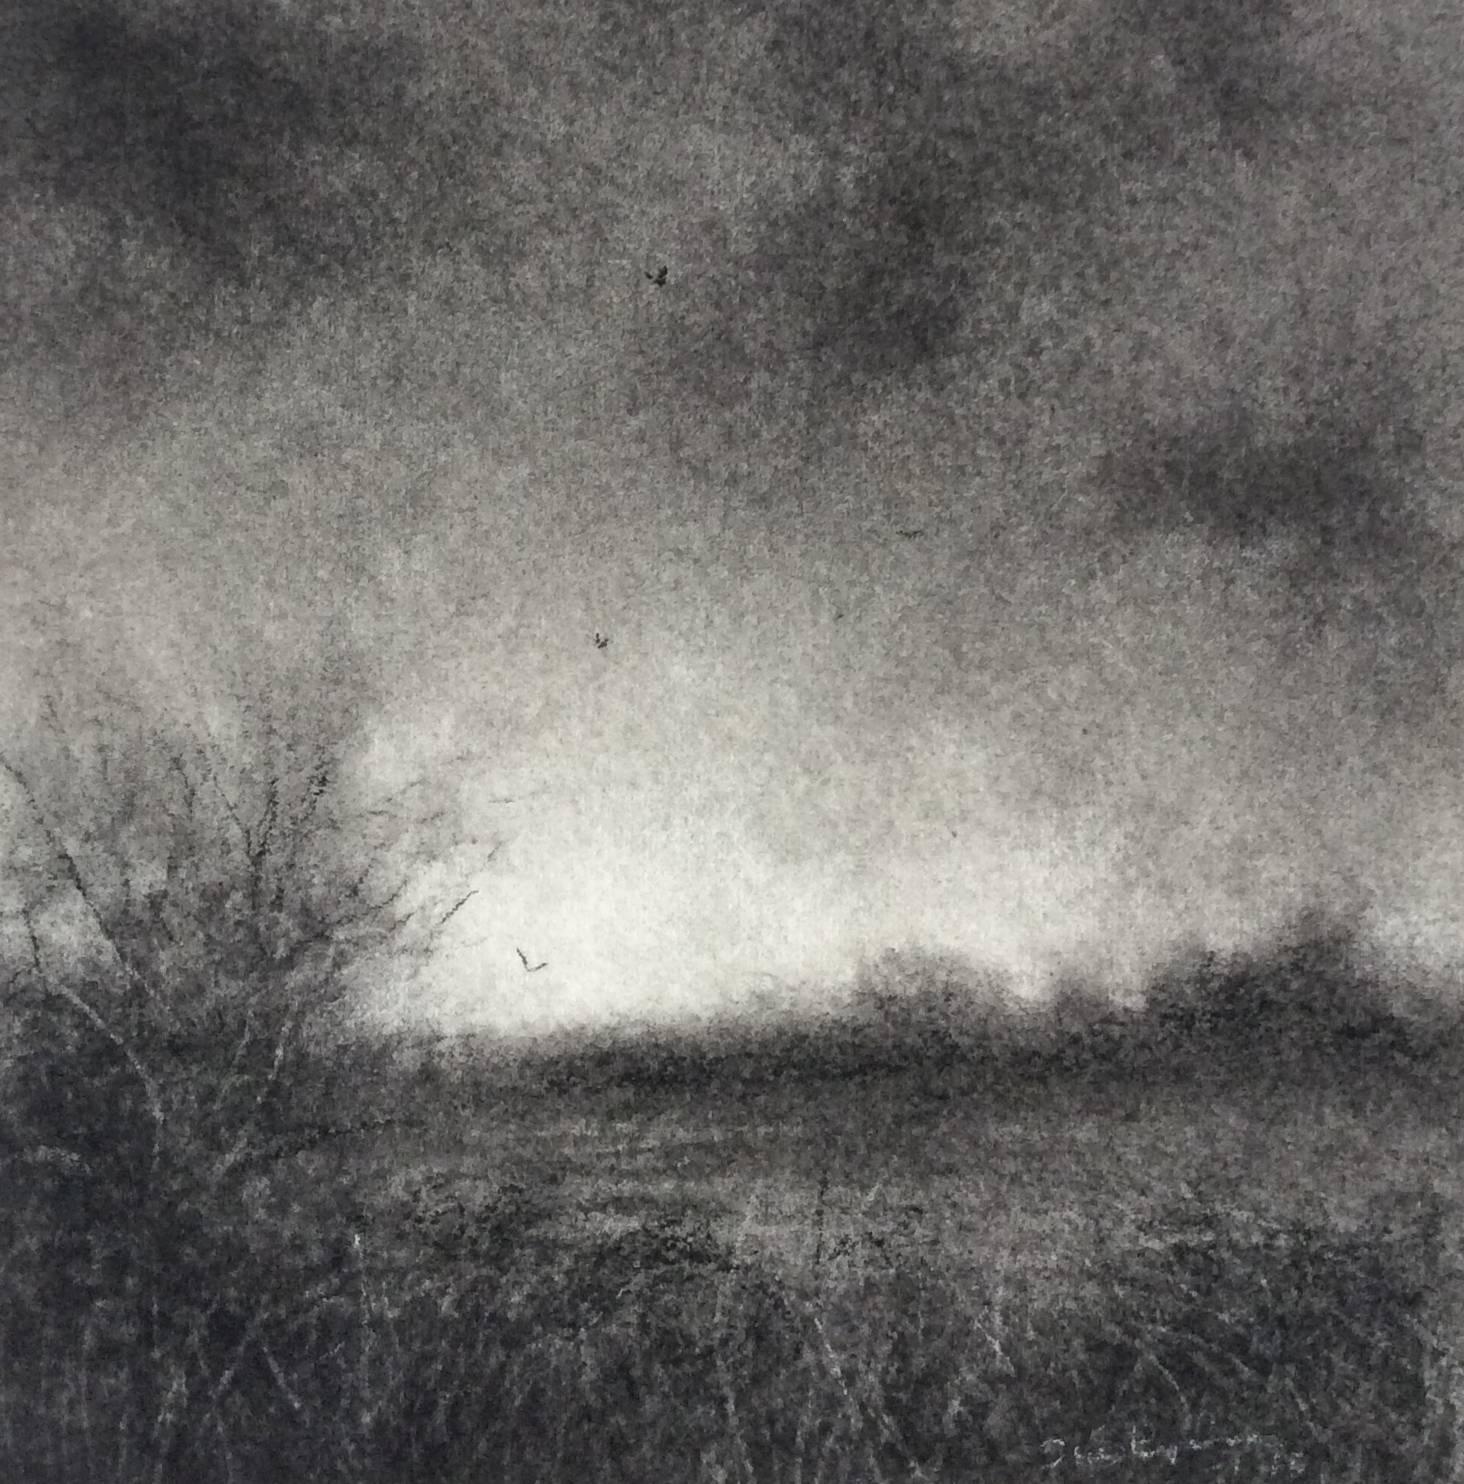 Sue Bryan Landscape Art - Edgeland XV (Miniature Realistic Landscape Drawing in Black Charcoal, Framed)